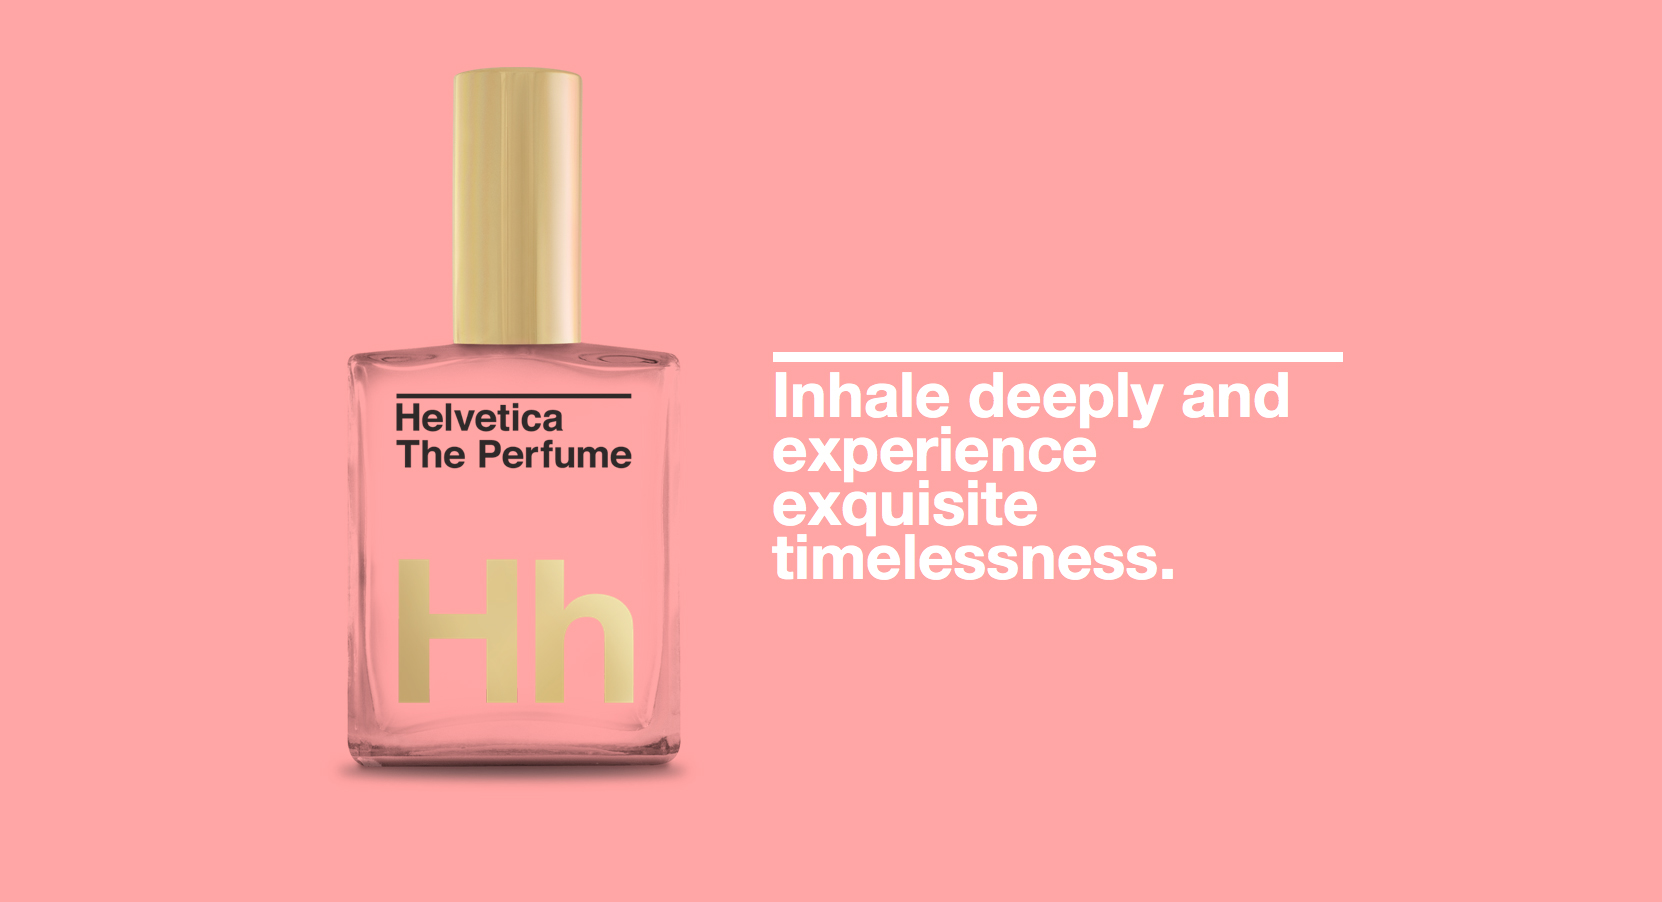 Helvetica Parfume